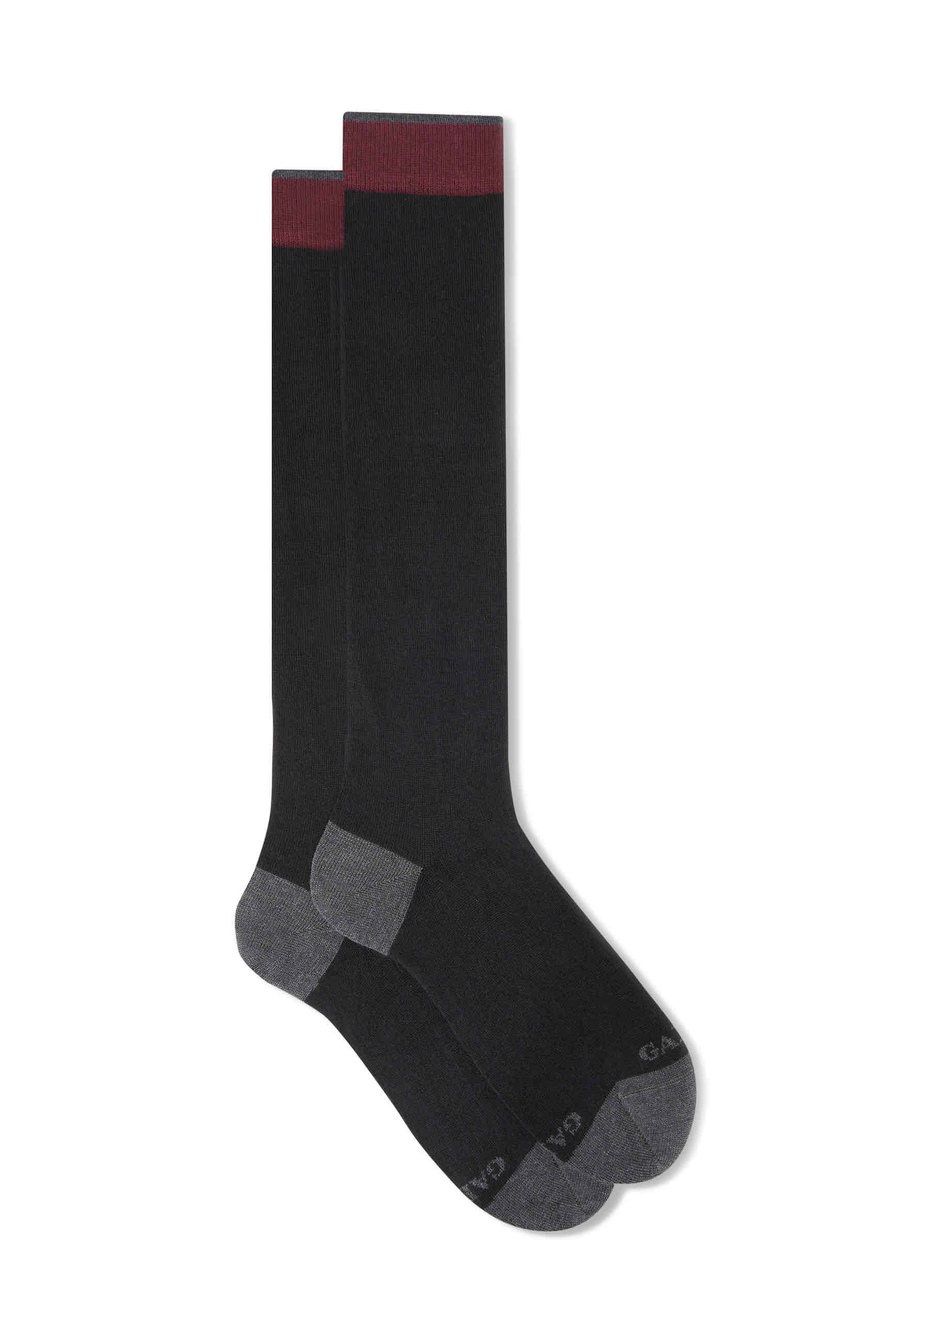 Women's long plain black cotton and cashmere socks with contrasting details - Gallo 1927 - Official Online Shop